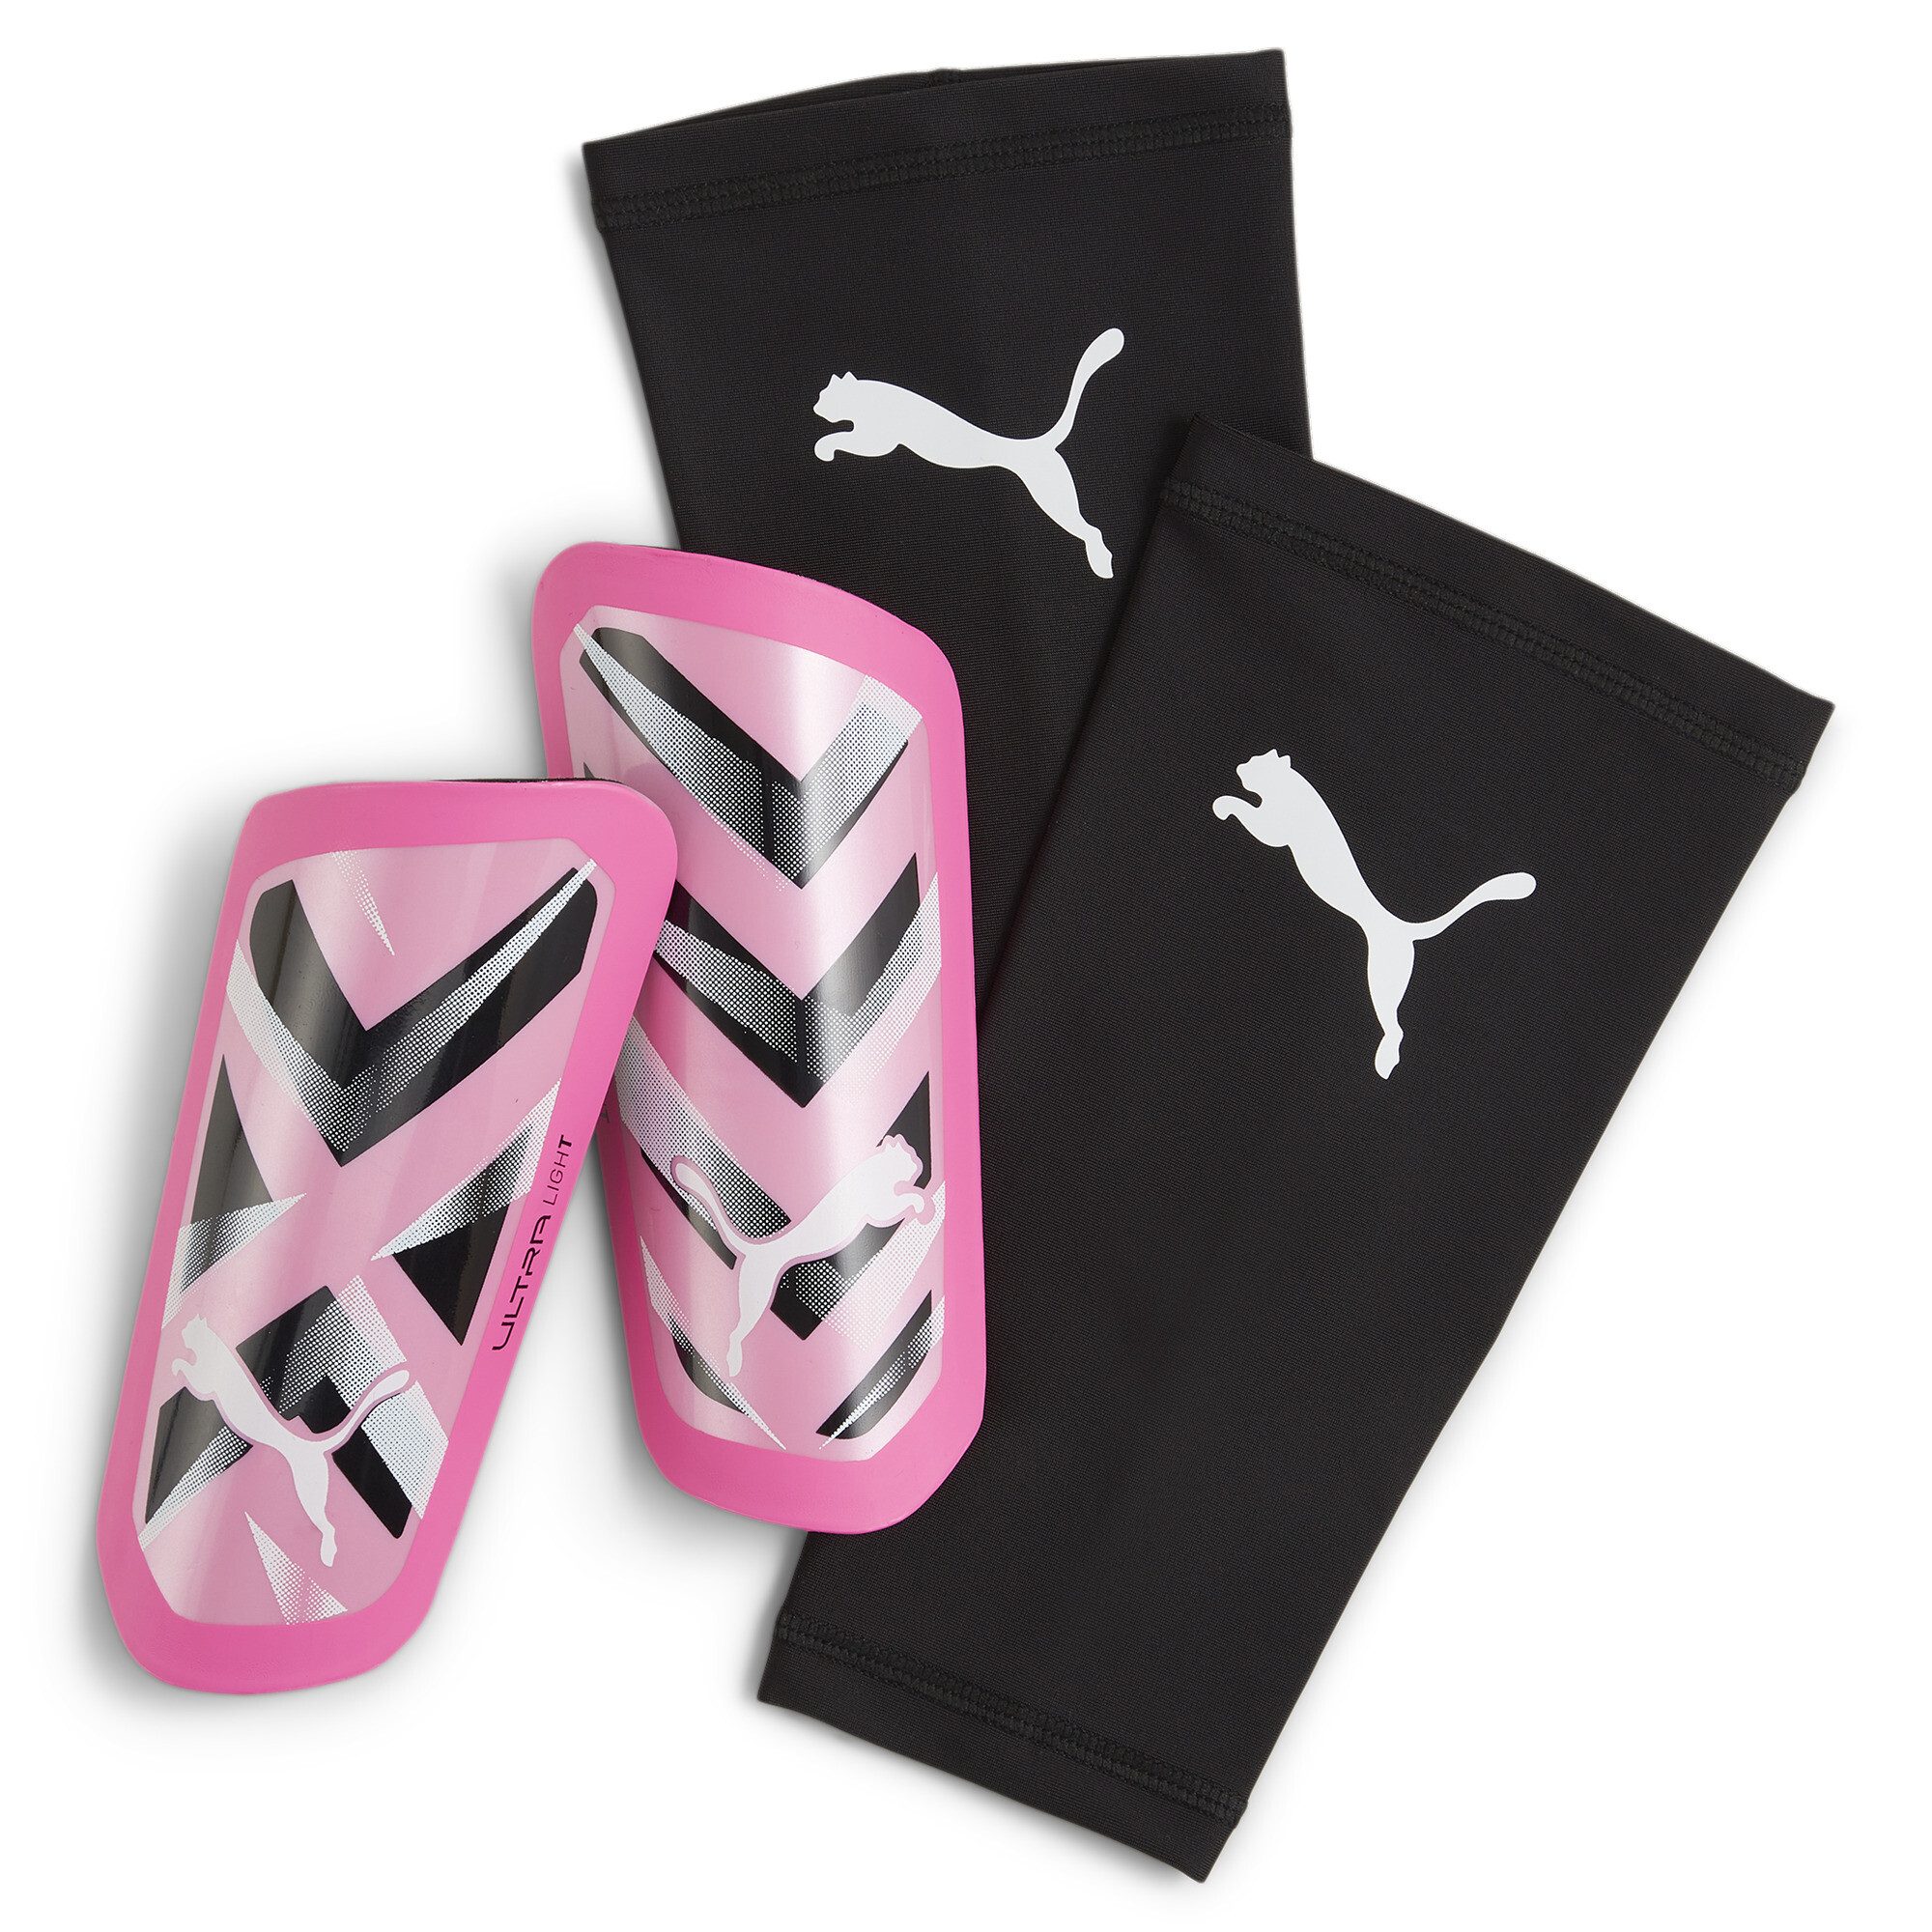 Puma ULTRA Light Sleeve Football Shin Guards, Pink, Size L, Accessories